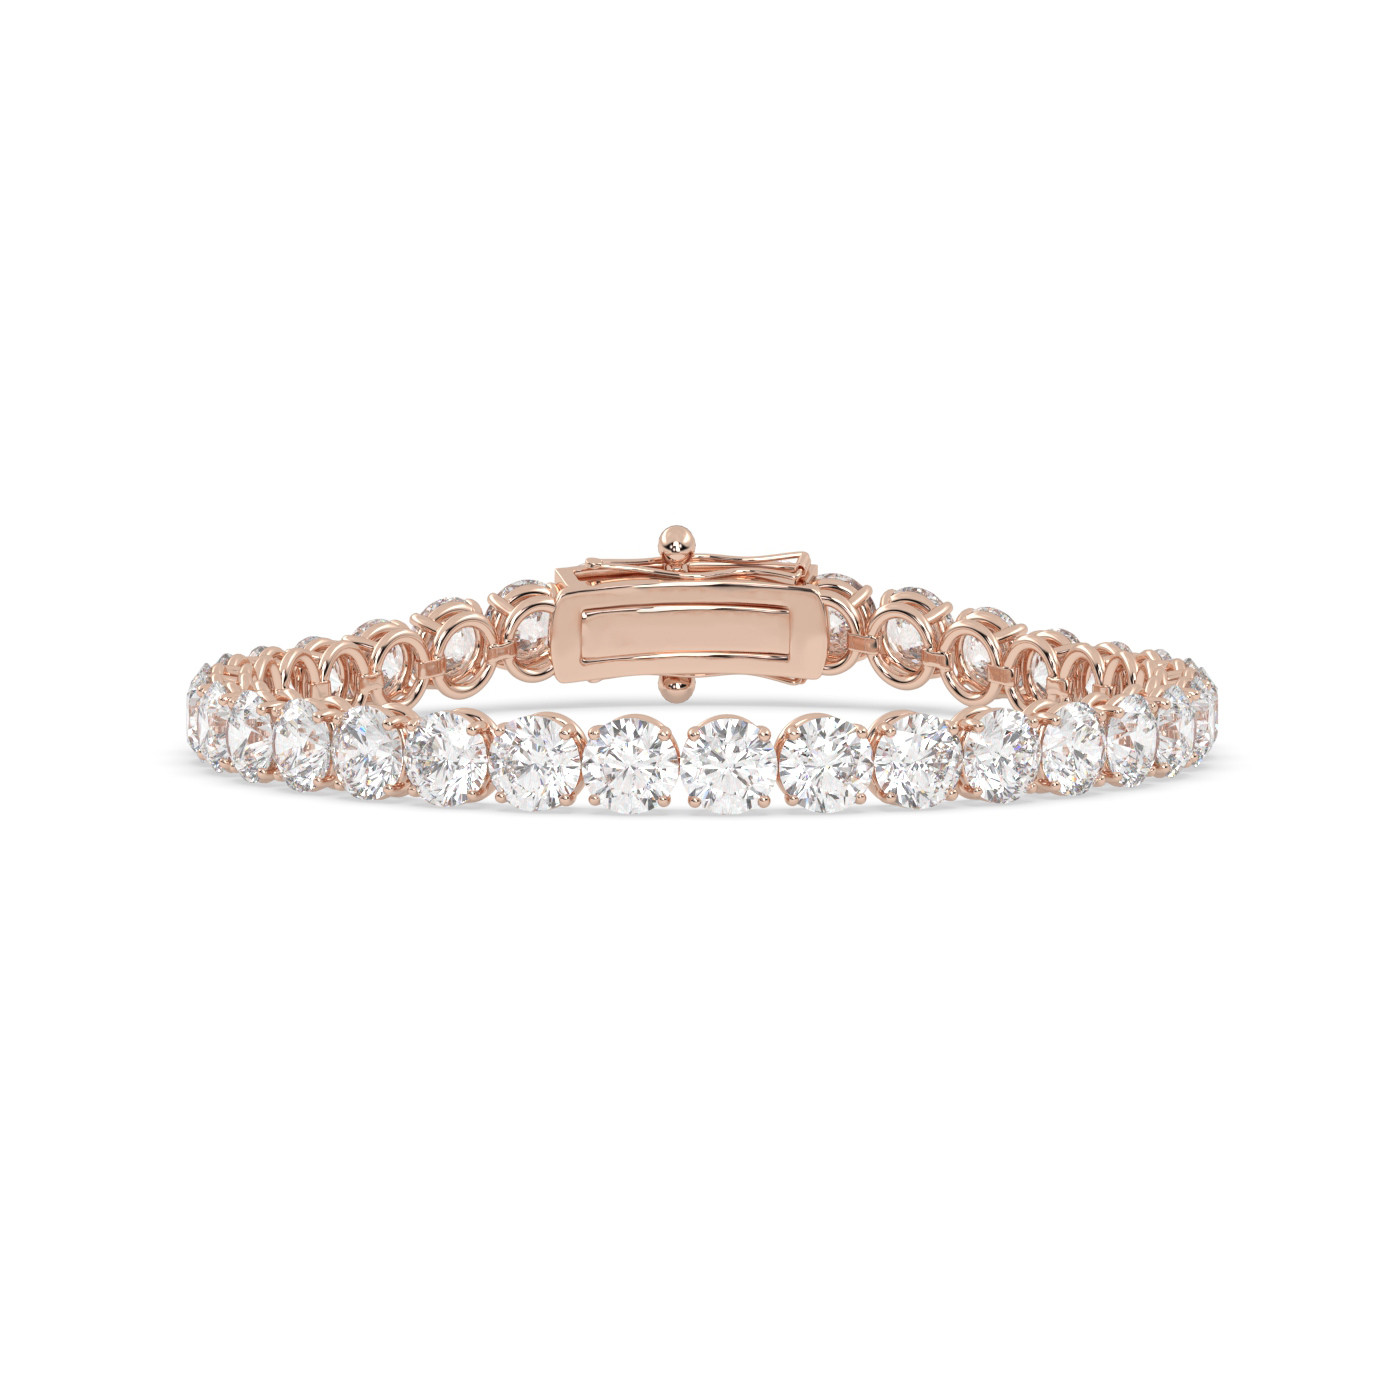 18k rose gold 10 carat round diamond tennis bracelet with traditional lock sytem Photos & images